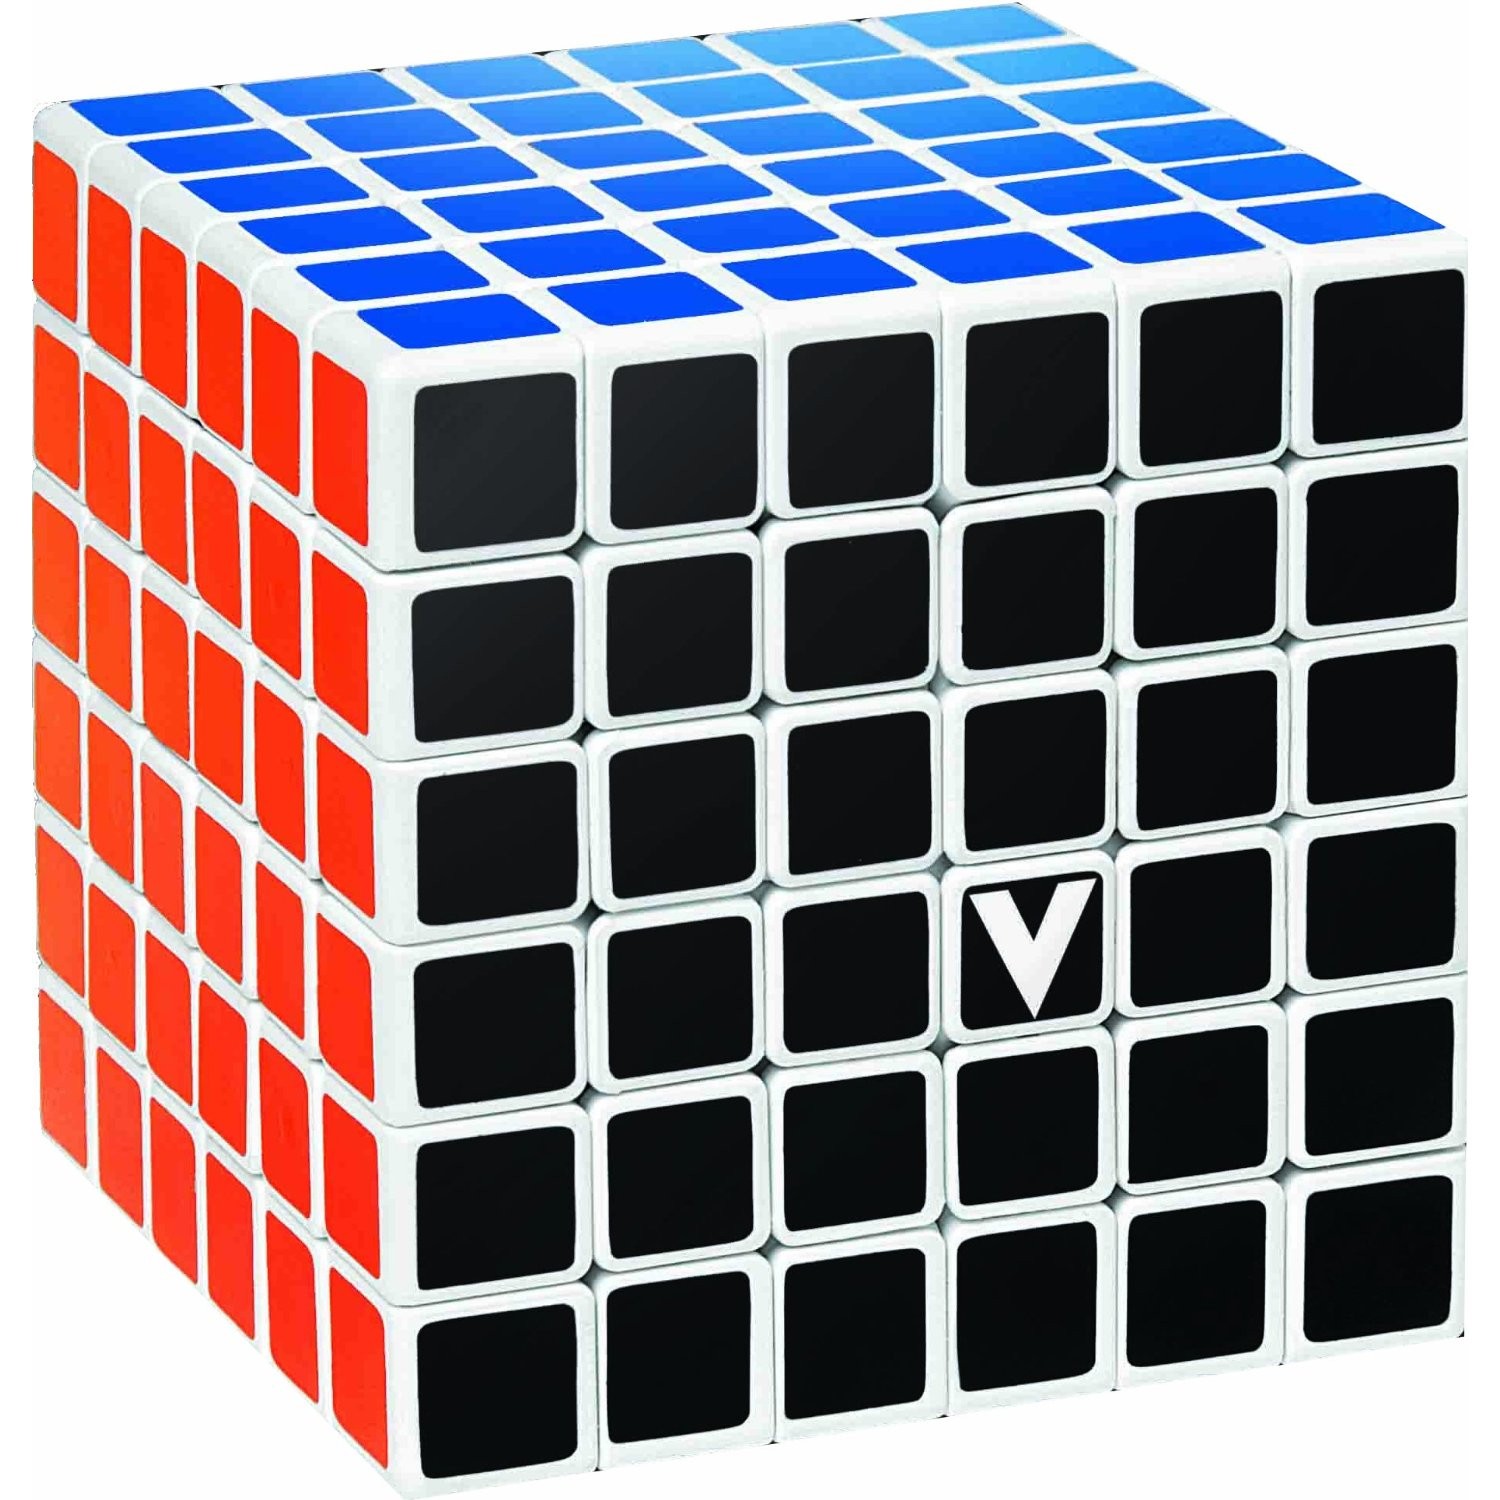 V-Cube 6x6 | V-Cube image2